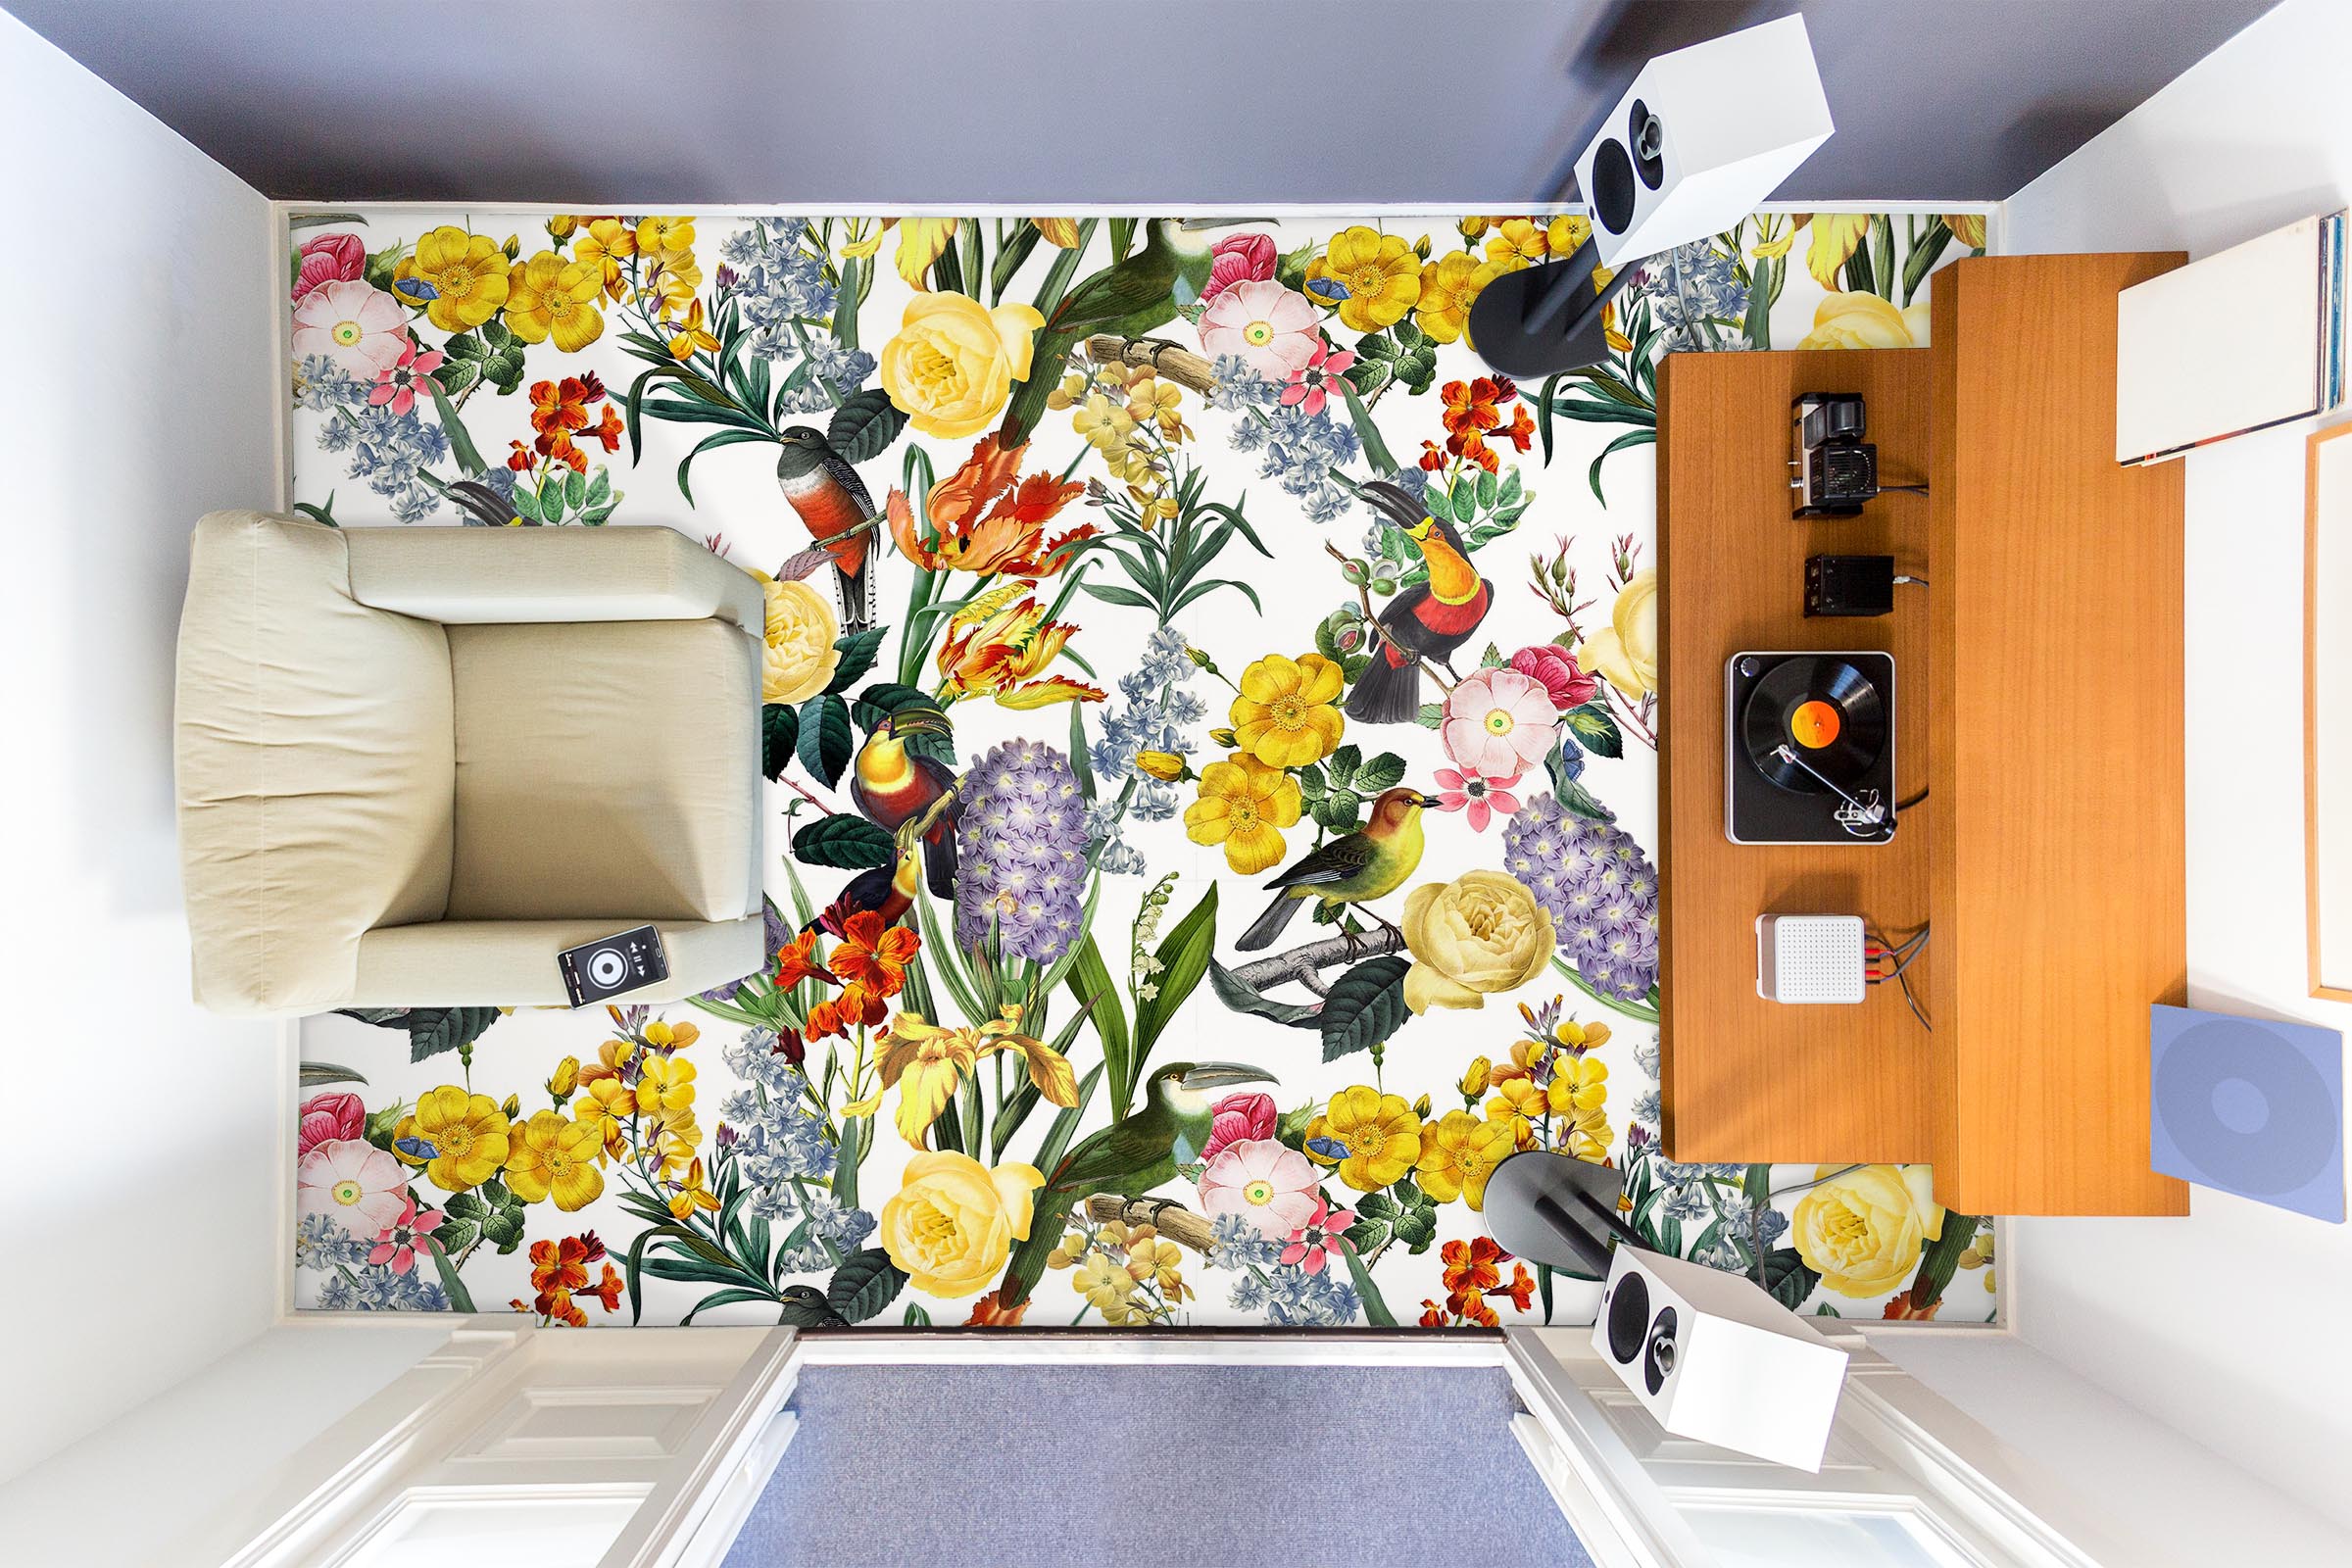 3D Colorful Flower Bird 99221 Uta Naumann Floor Mural  Wallpaper Murals Self-Adhesive Removable Print Epoxy